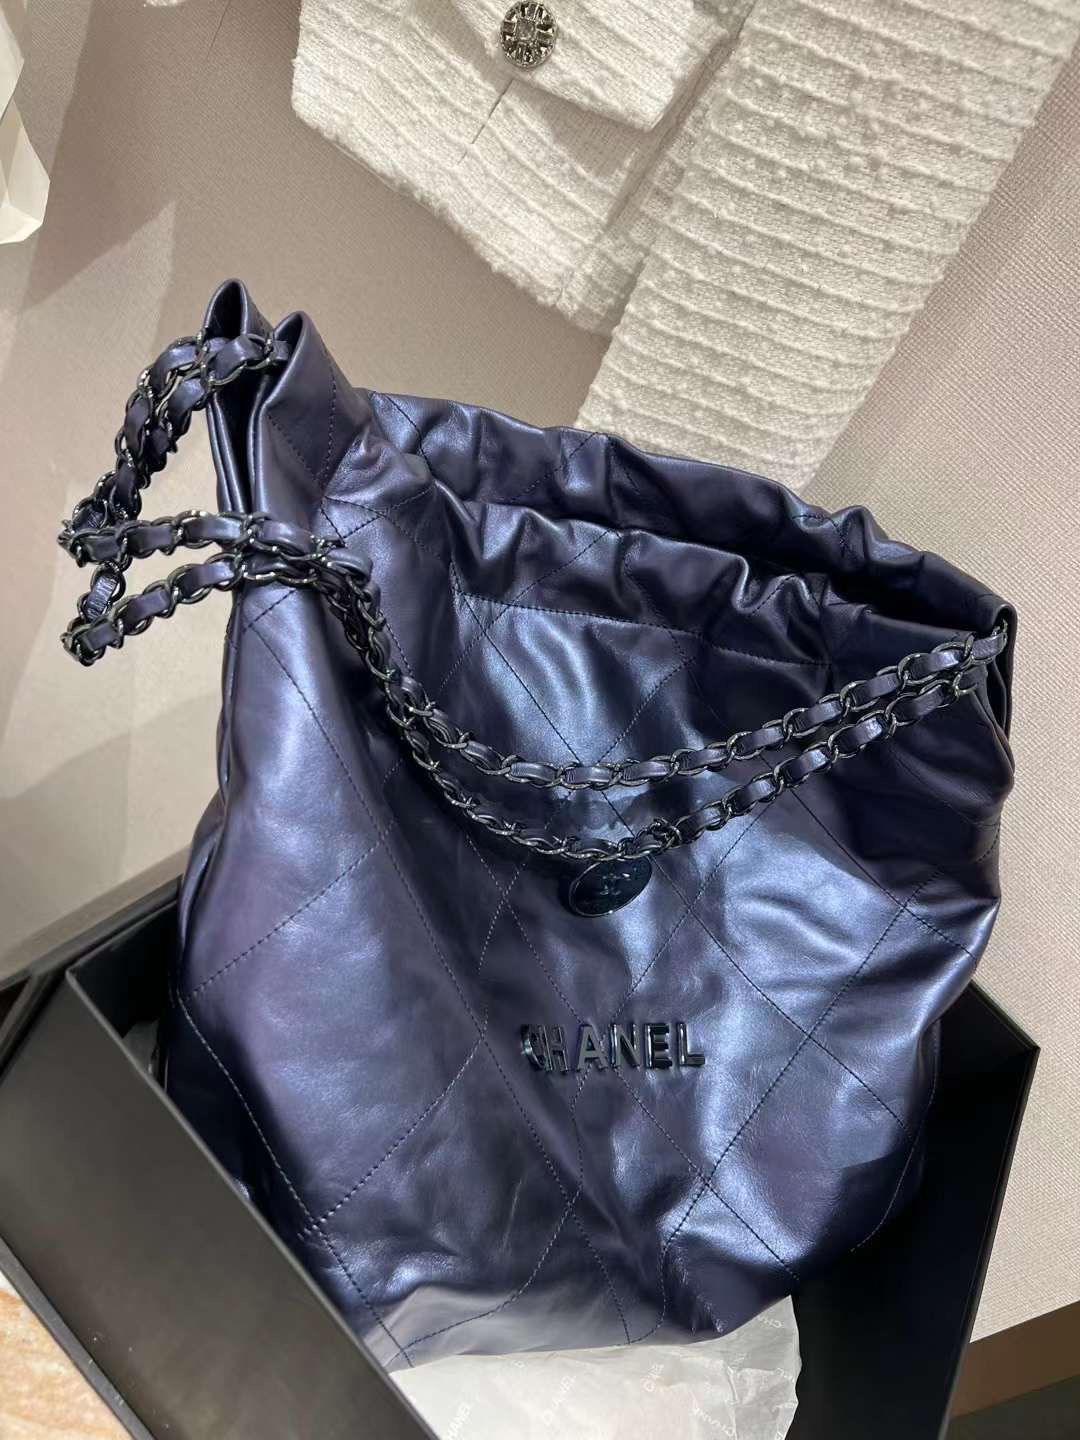 【P2220】香奈儿包包官网 Chanel 22 Bag灰蓝色菱格纹光面皮链条购物袋